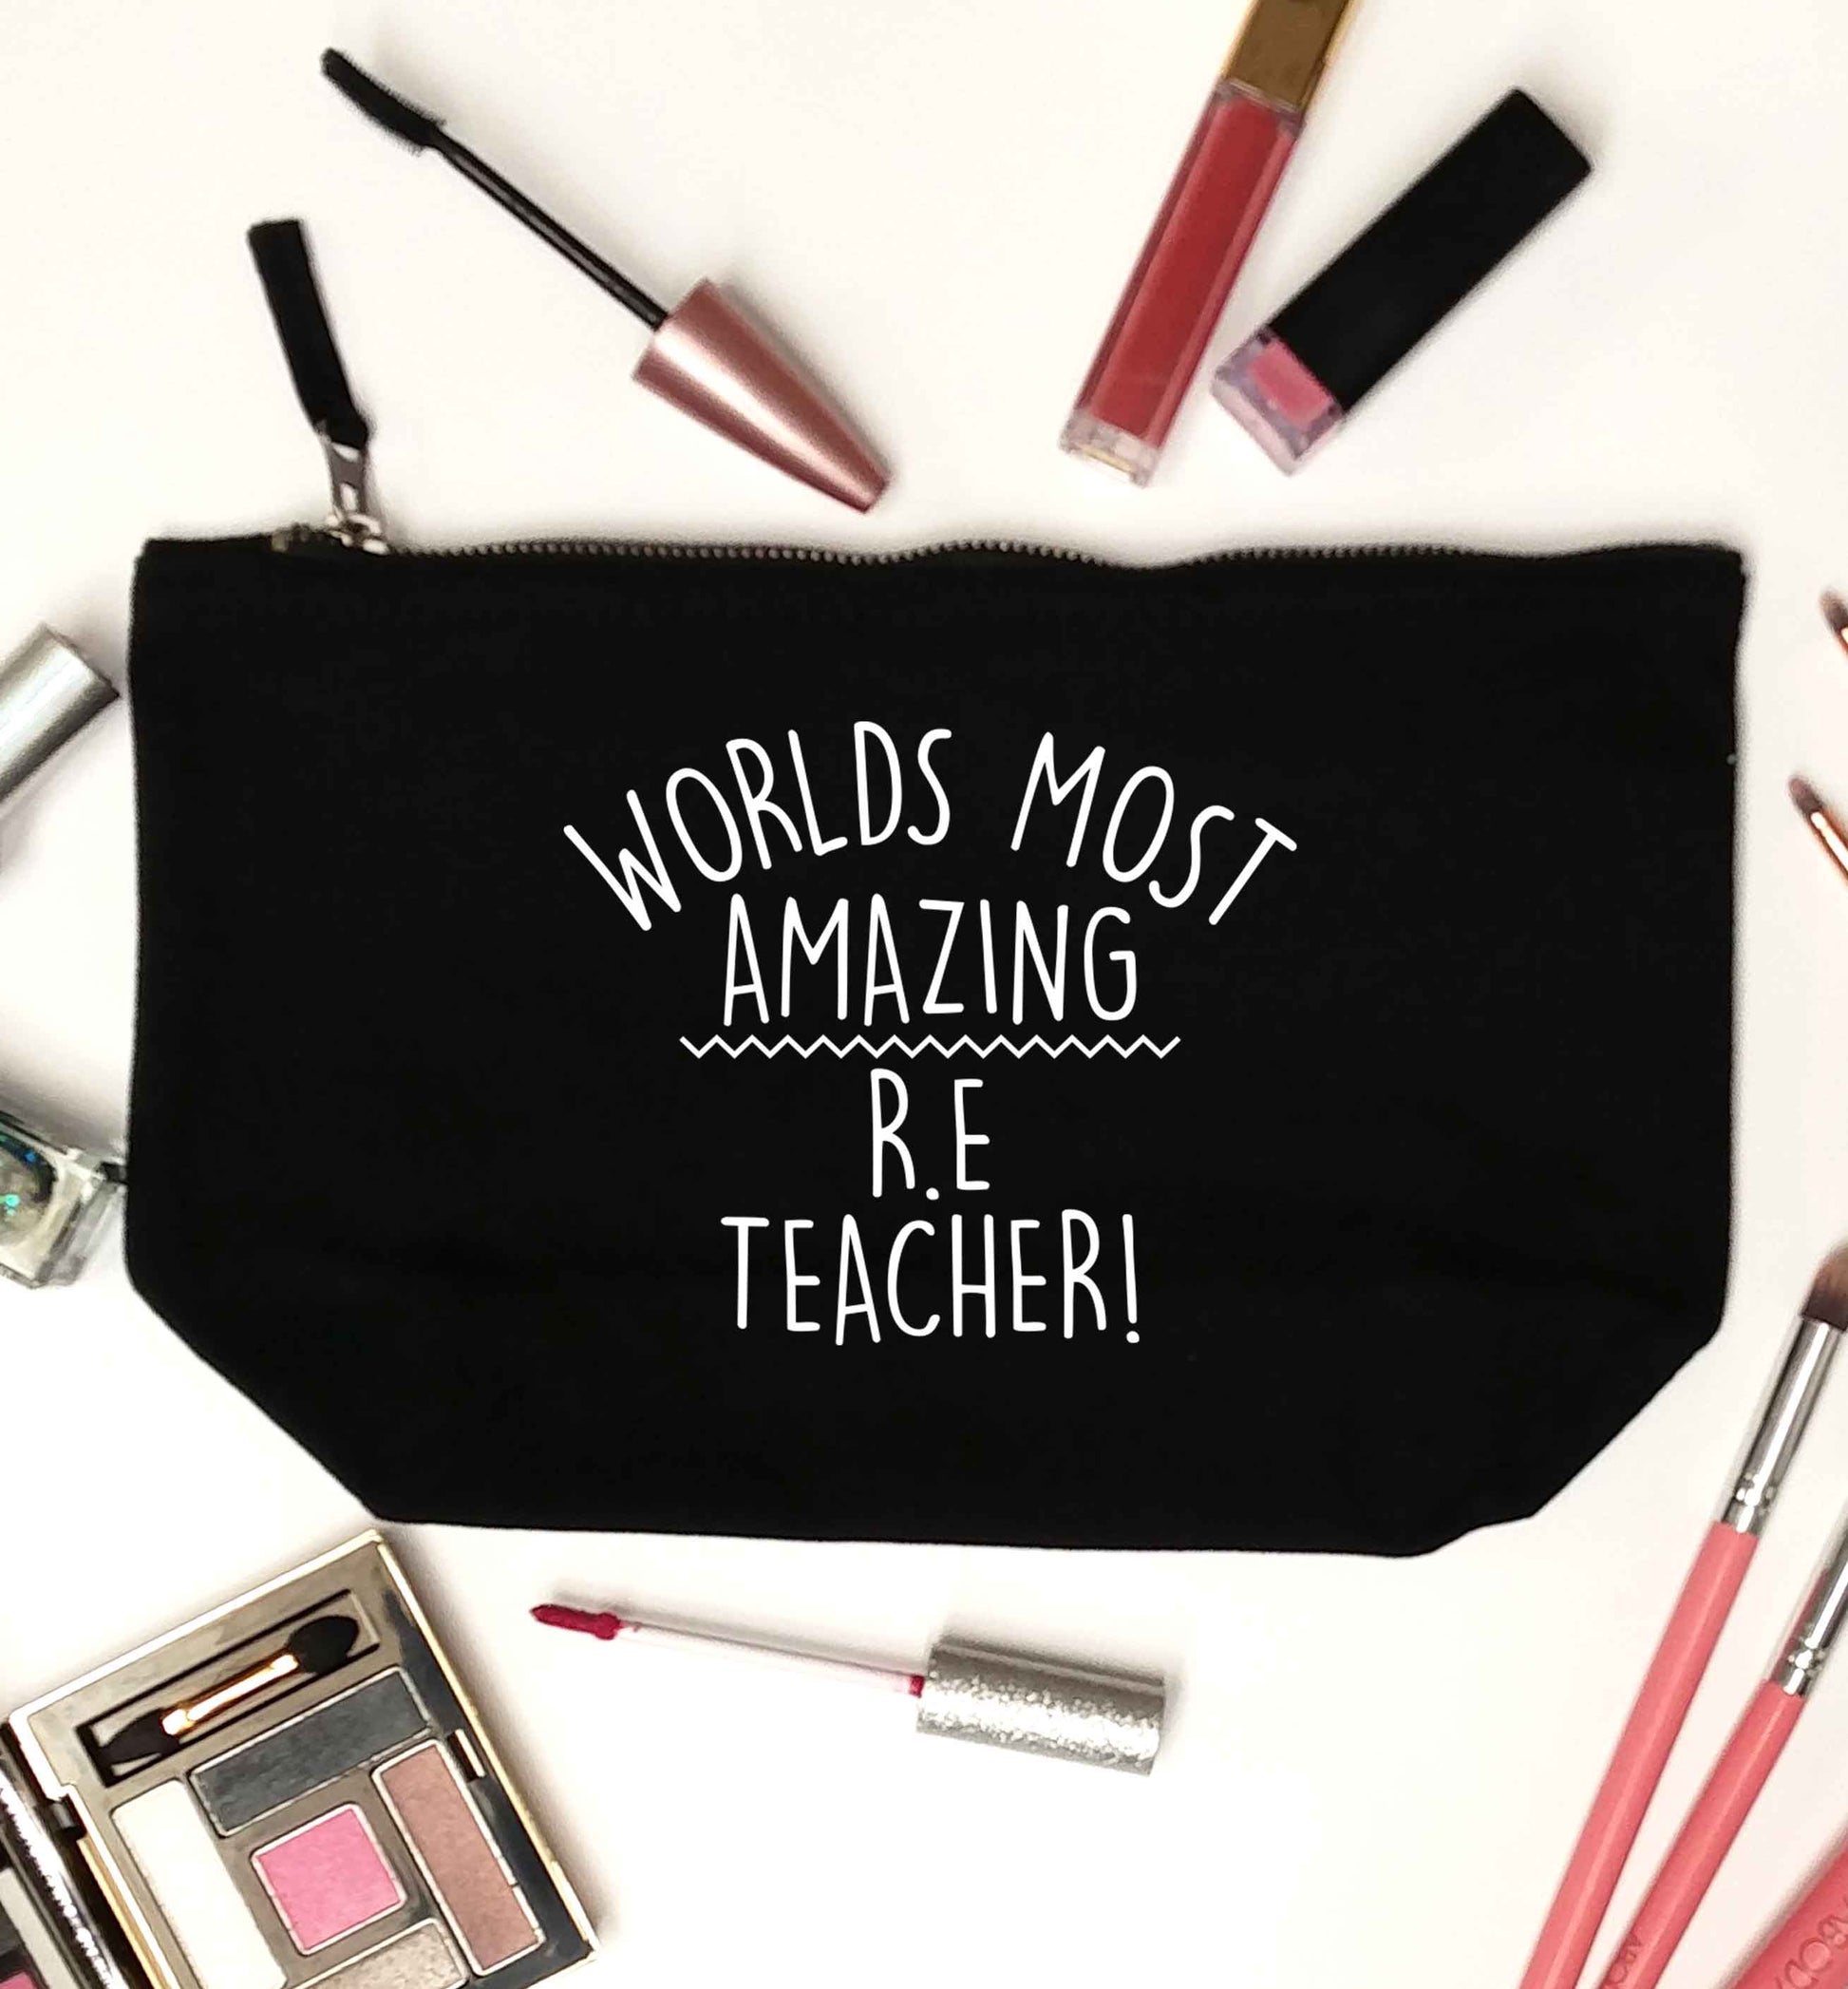 Worlds most amazing R.E teacher black makeup bag